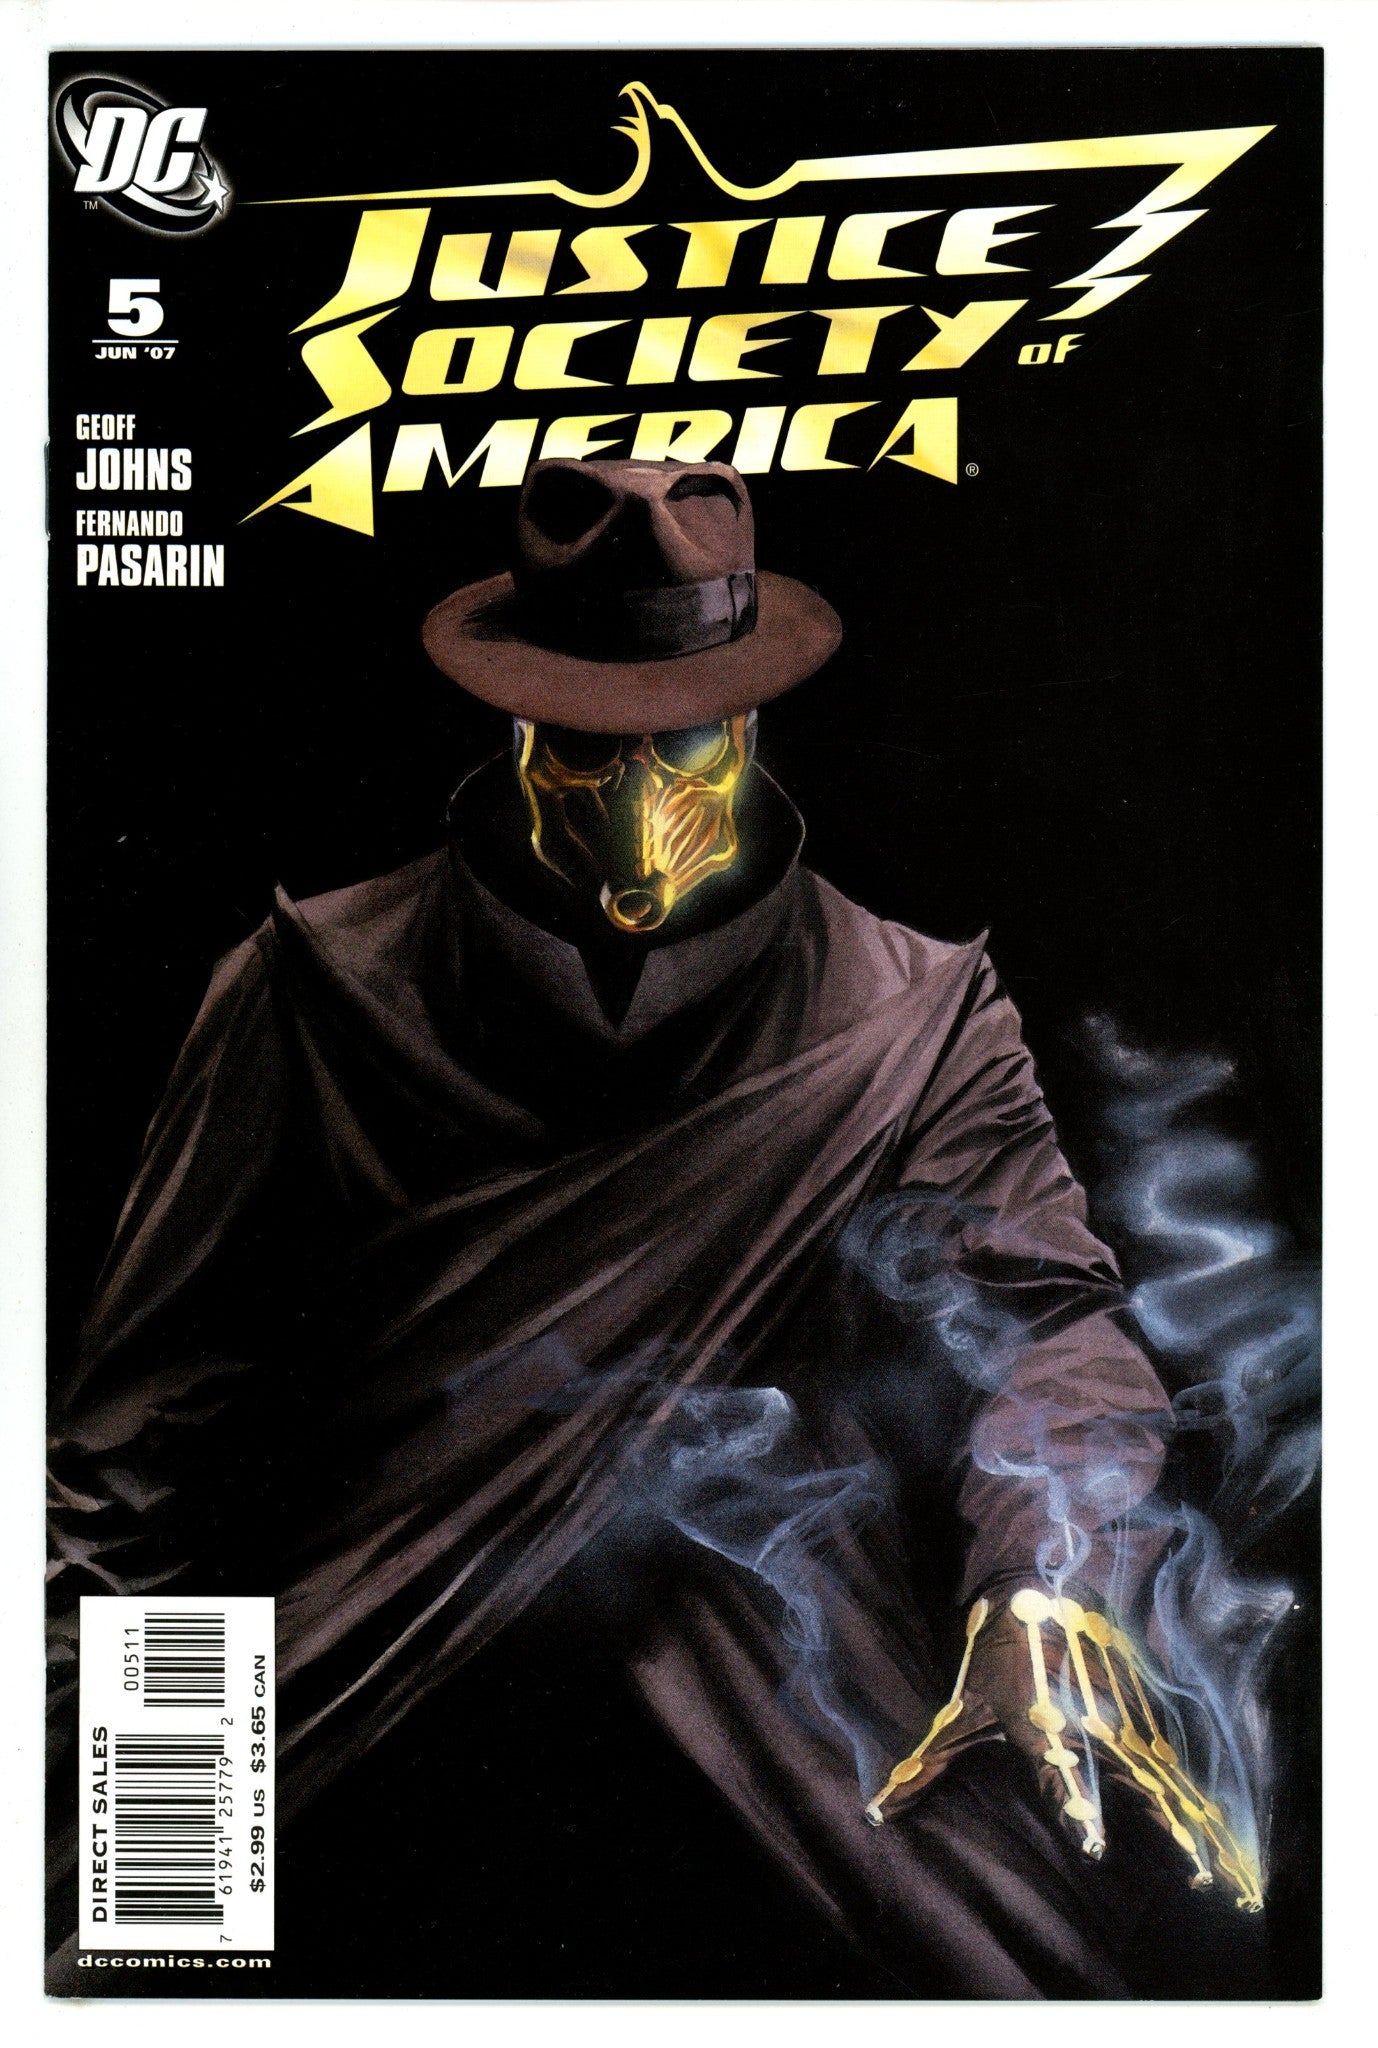 Justice Society of America Vol 3 5 (2007)